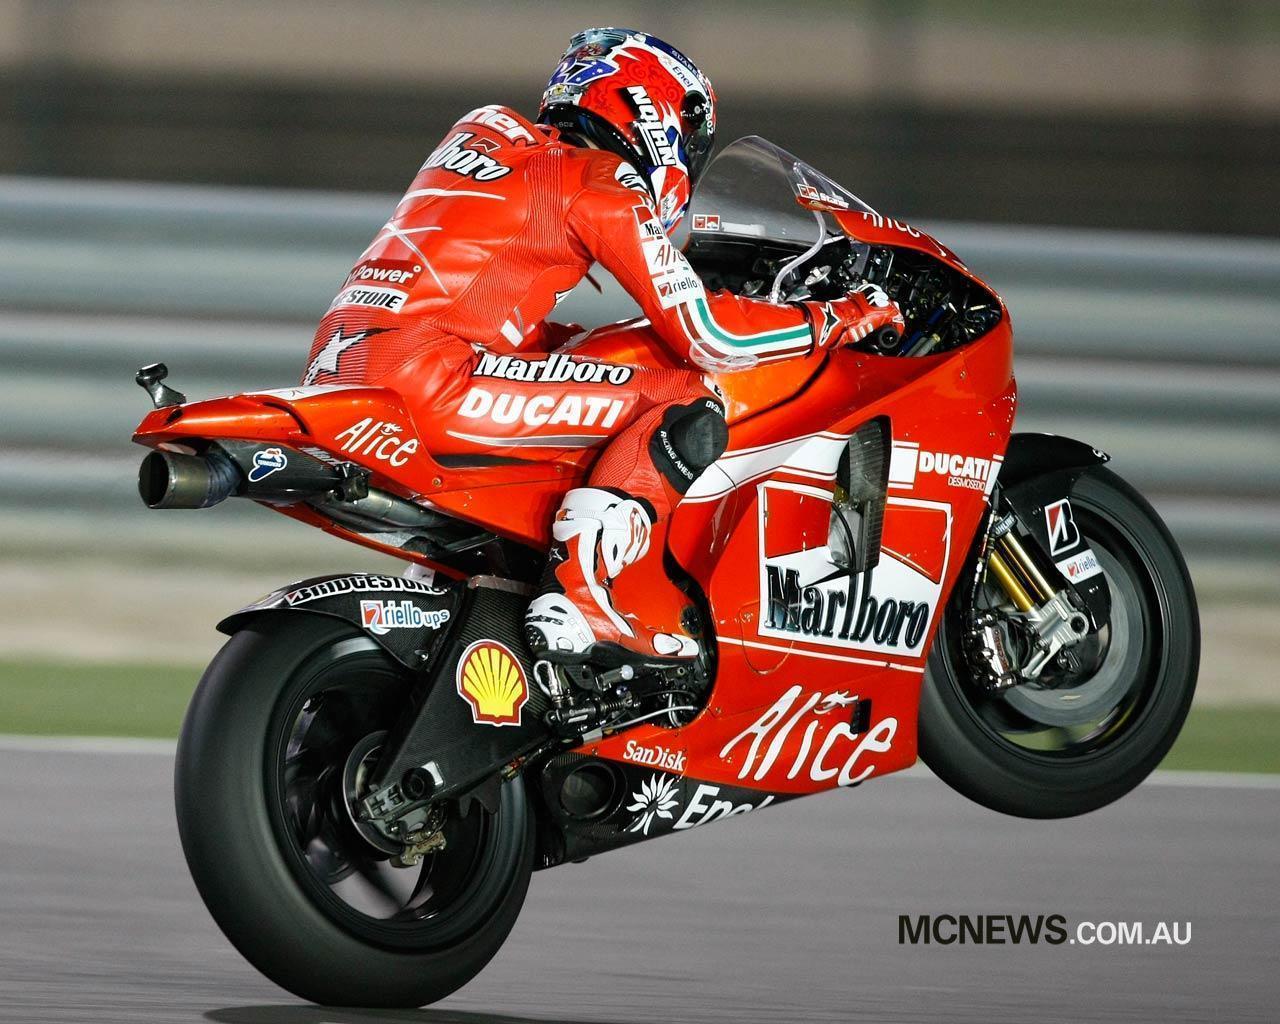 Honda Casey Stoner Ducati MotoGP Wallpaper. Queenwallpaper